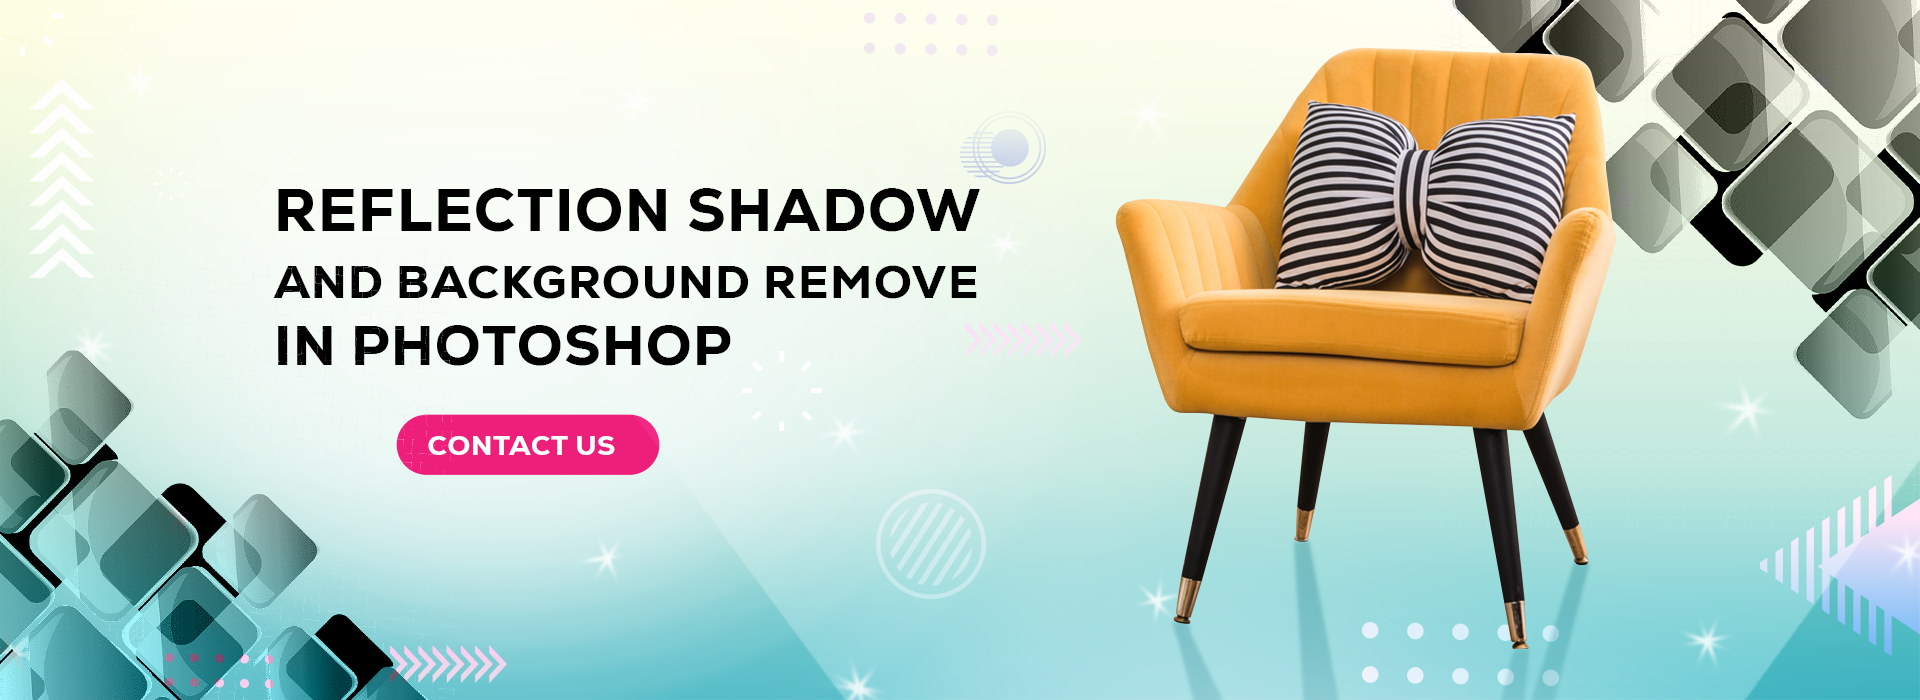 CSBD New SlideReflection shadow 01